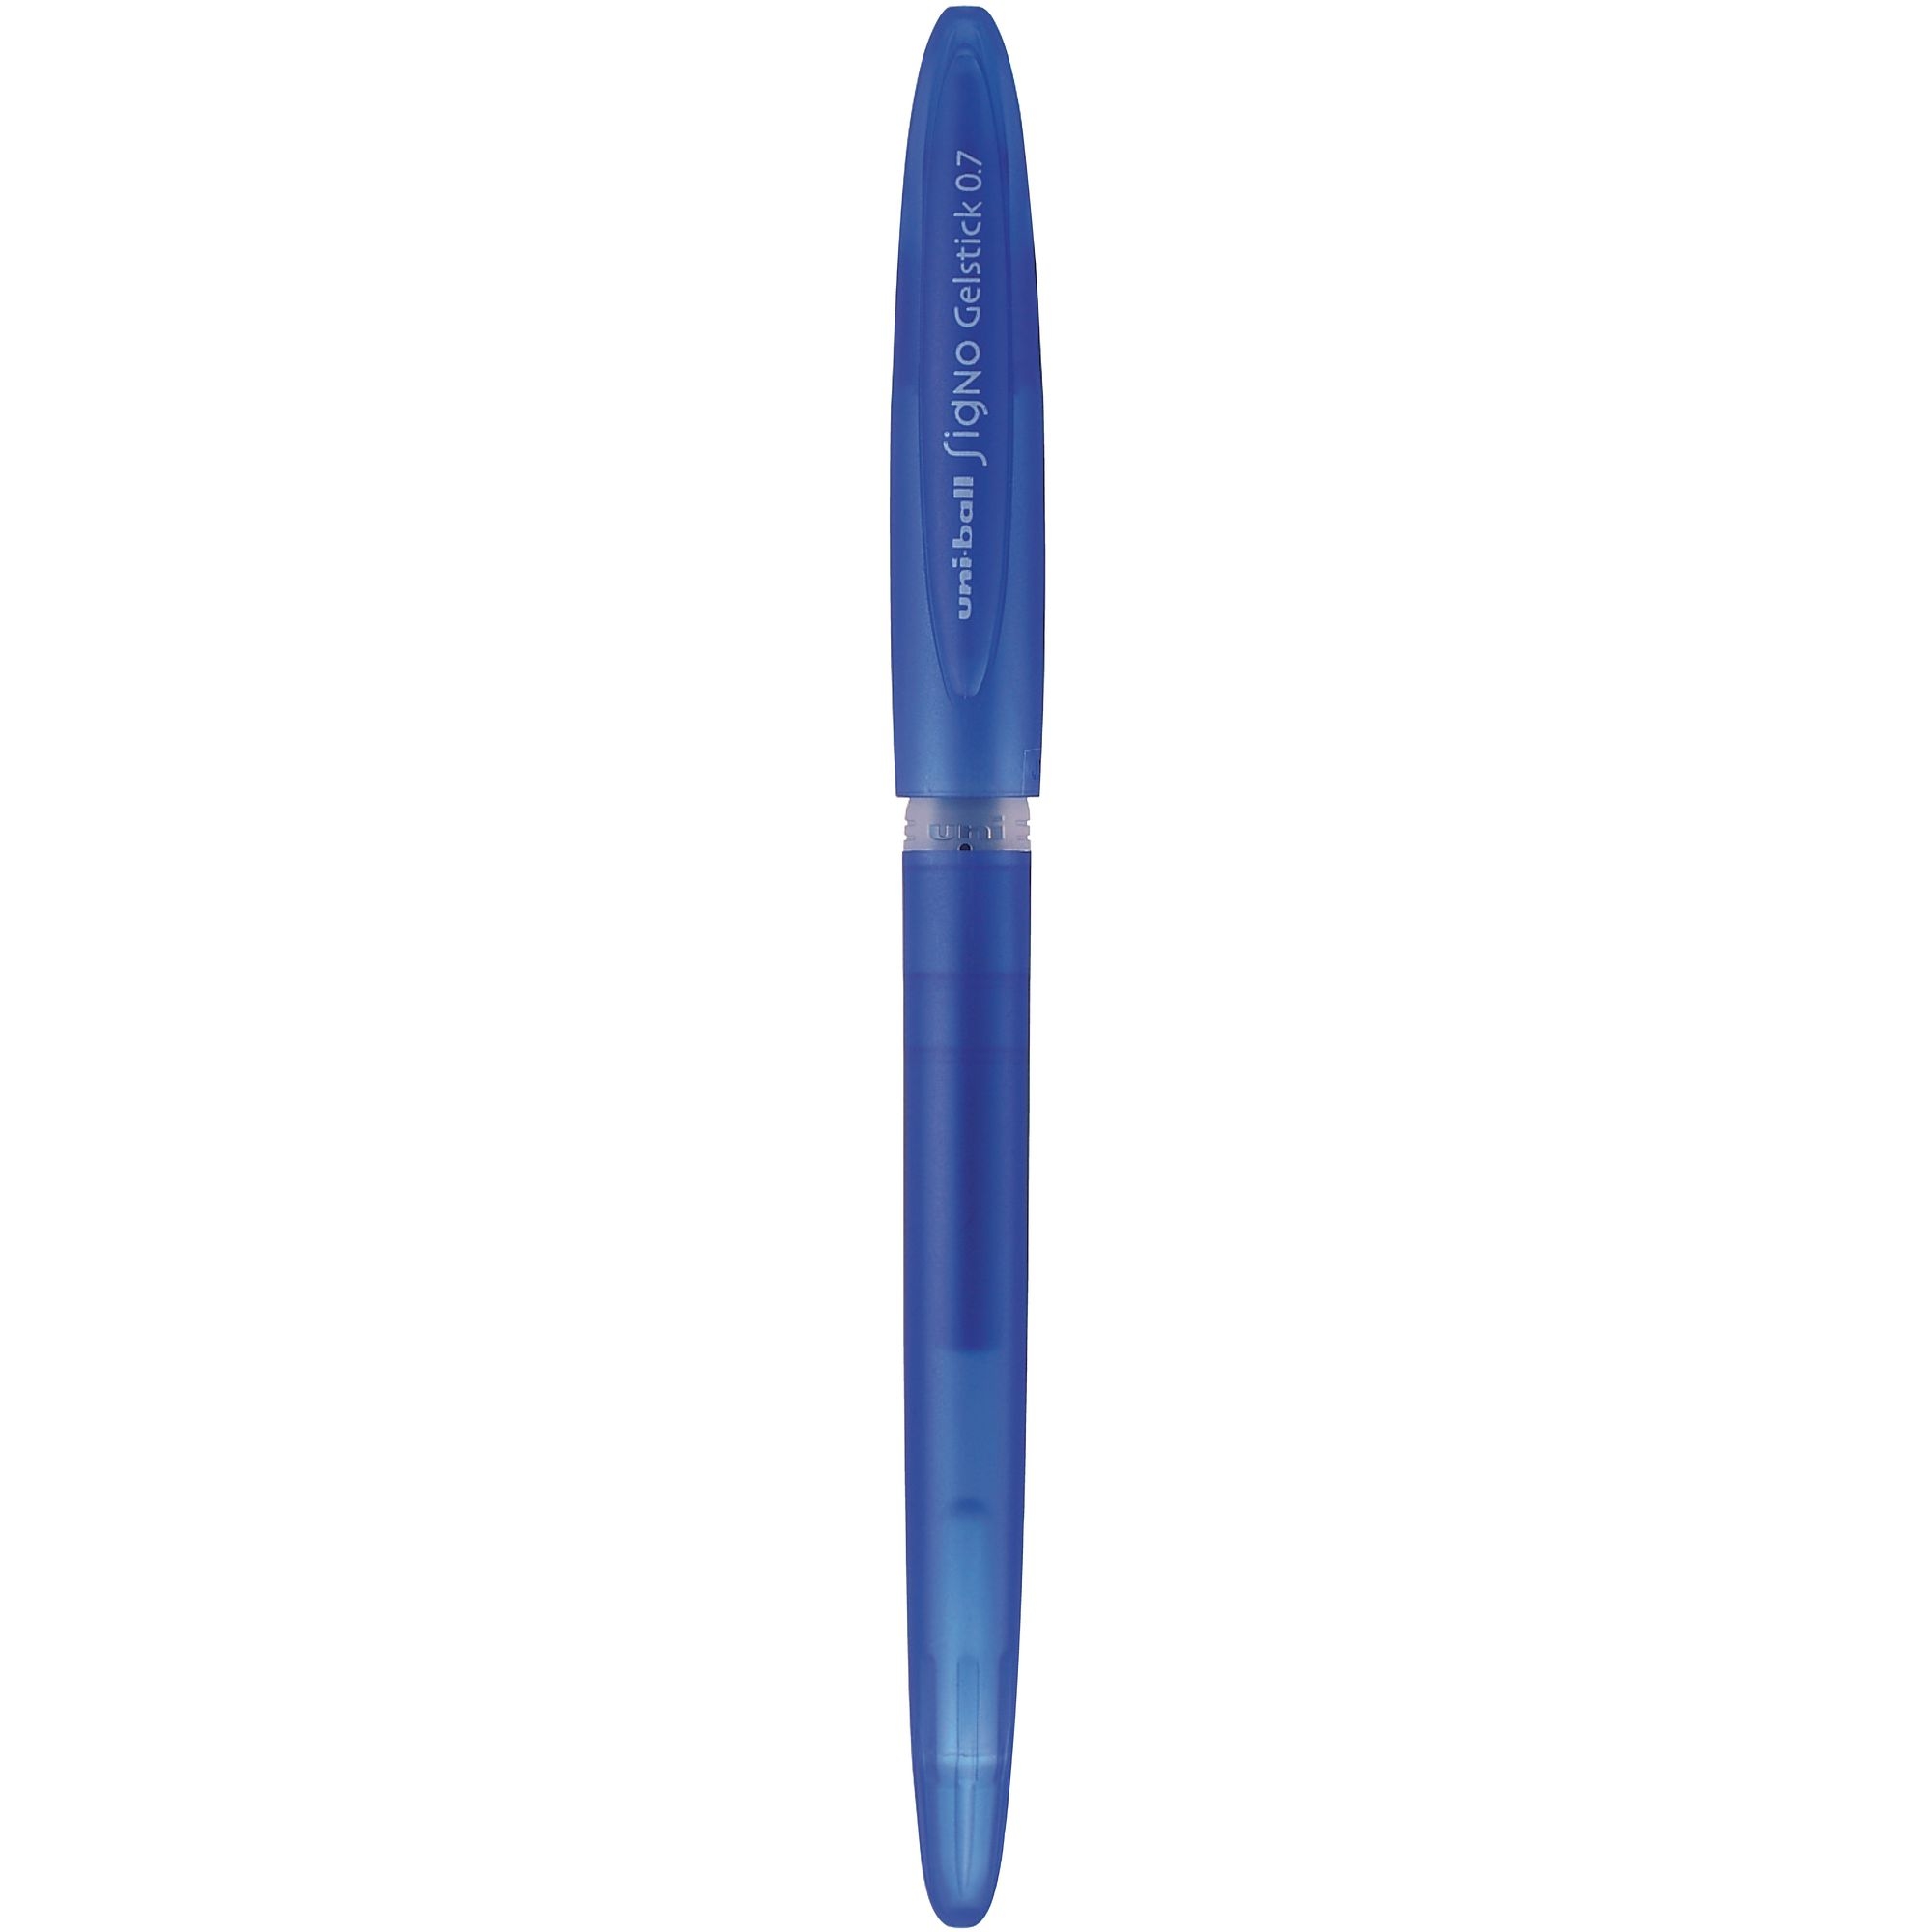 Uni-ball Signo Gelstick Rollerball Pen Blue - Pack of 12